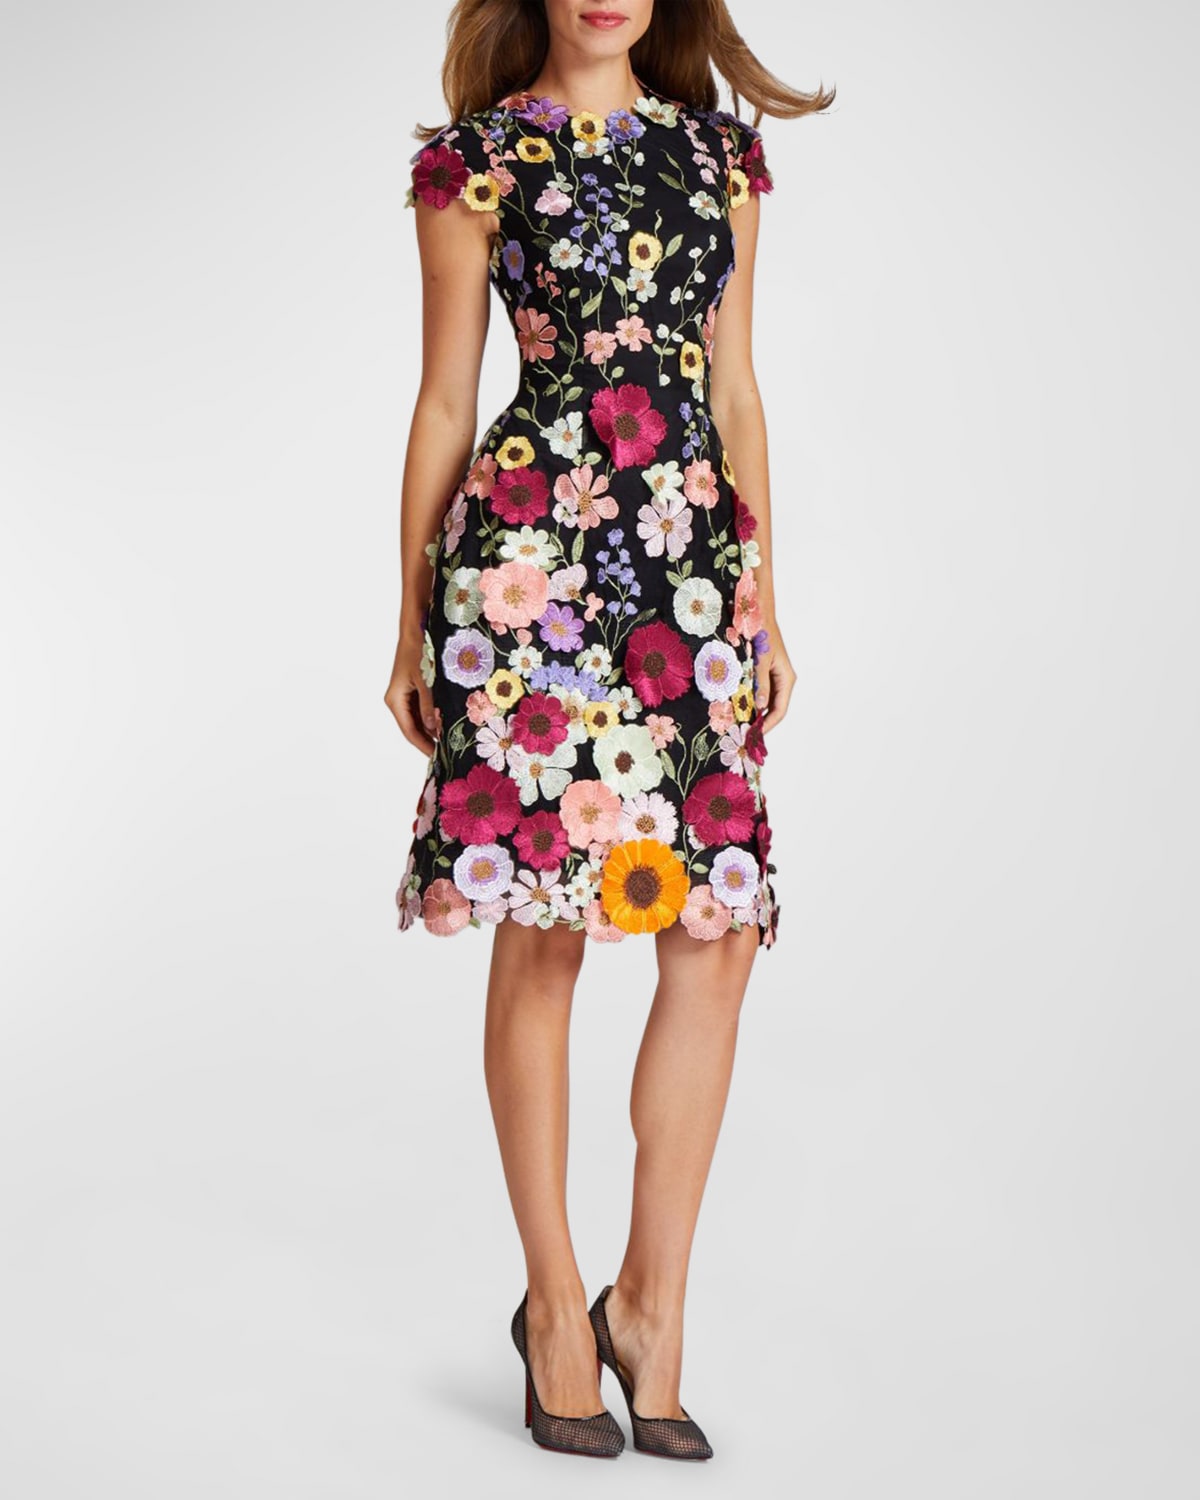 Rickie Freeman For Teri Jon 3d Floral Applique Lace Knee-length Dress In Black Multi